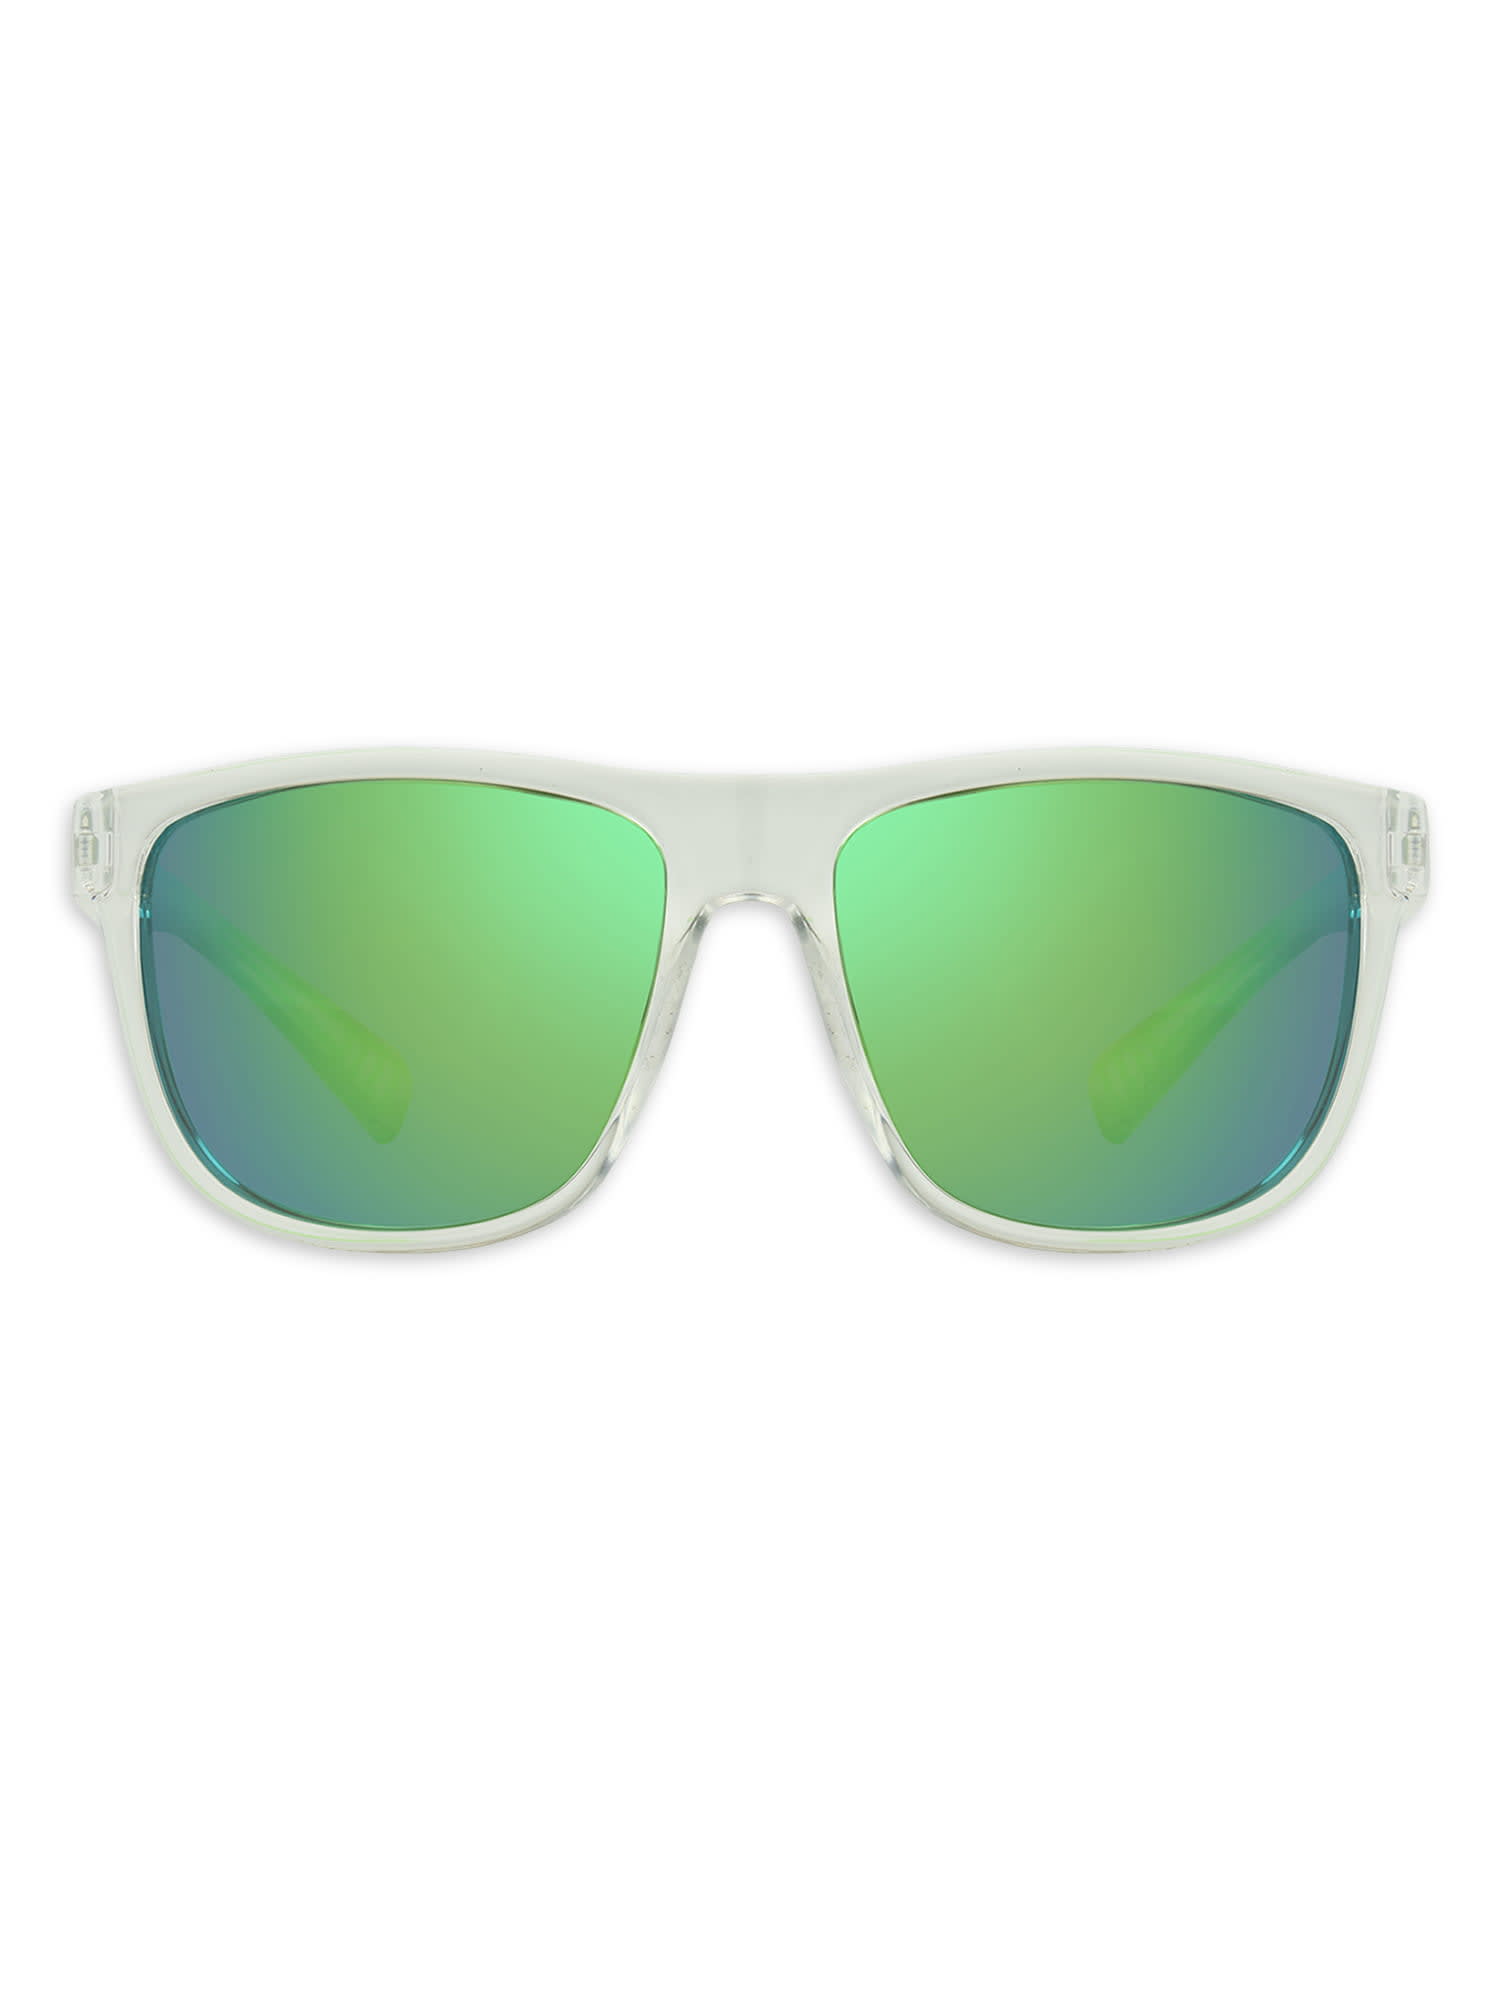 Berkley Sunglass Strap, Black; Fits Fishing Sunglasses for Men & Women -  DroneUp Delivery